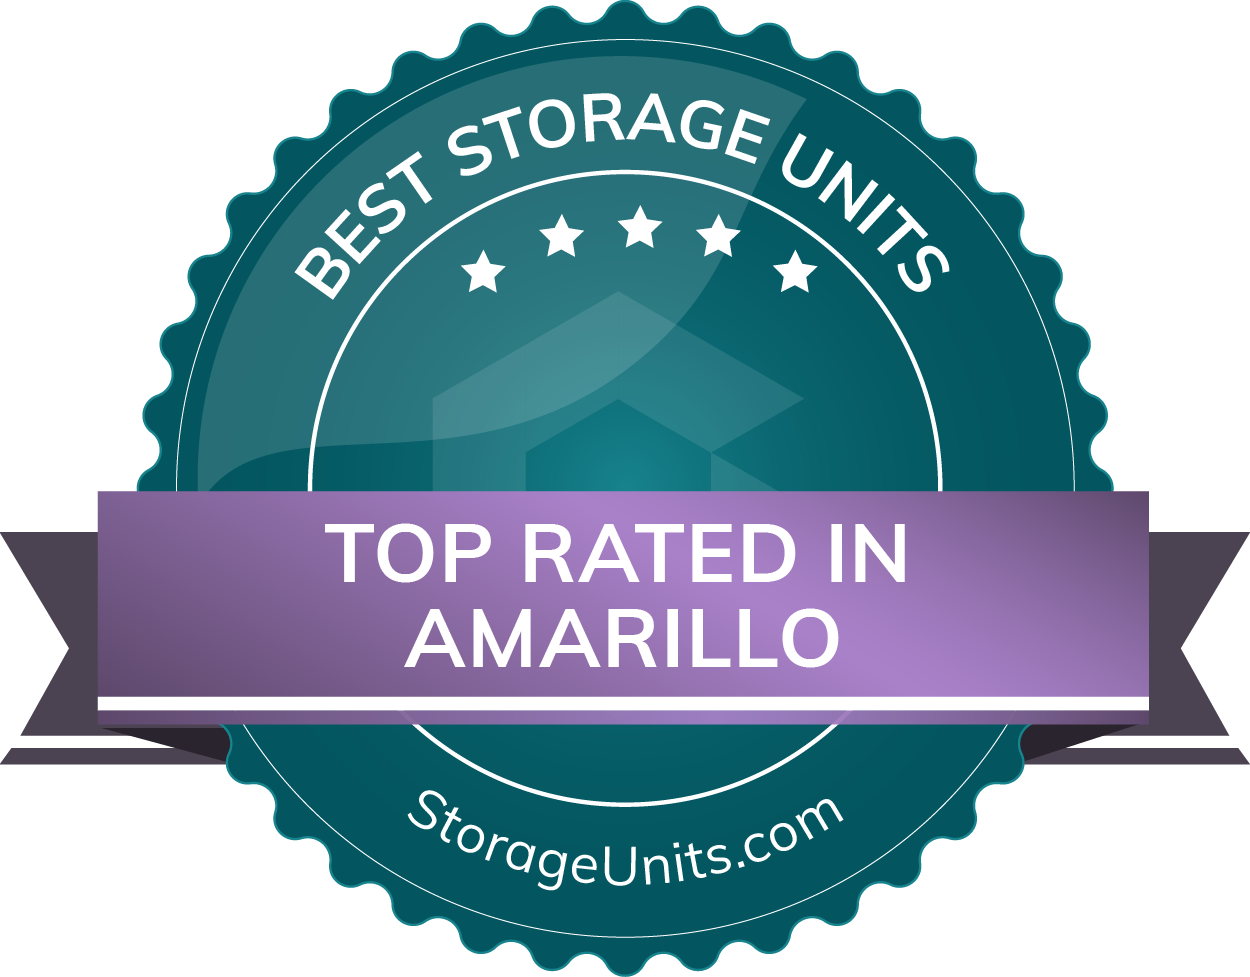 Best Self Storage Units in Amarillo, Texas of 2022